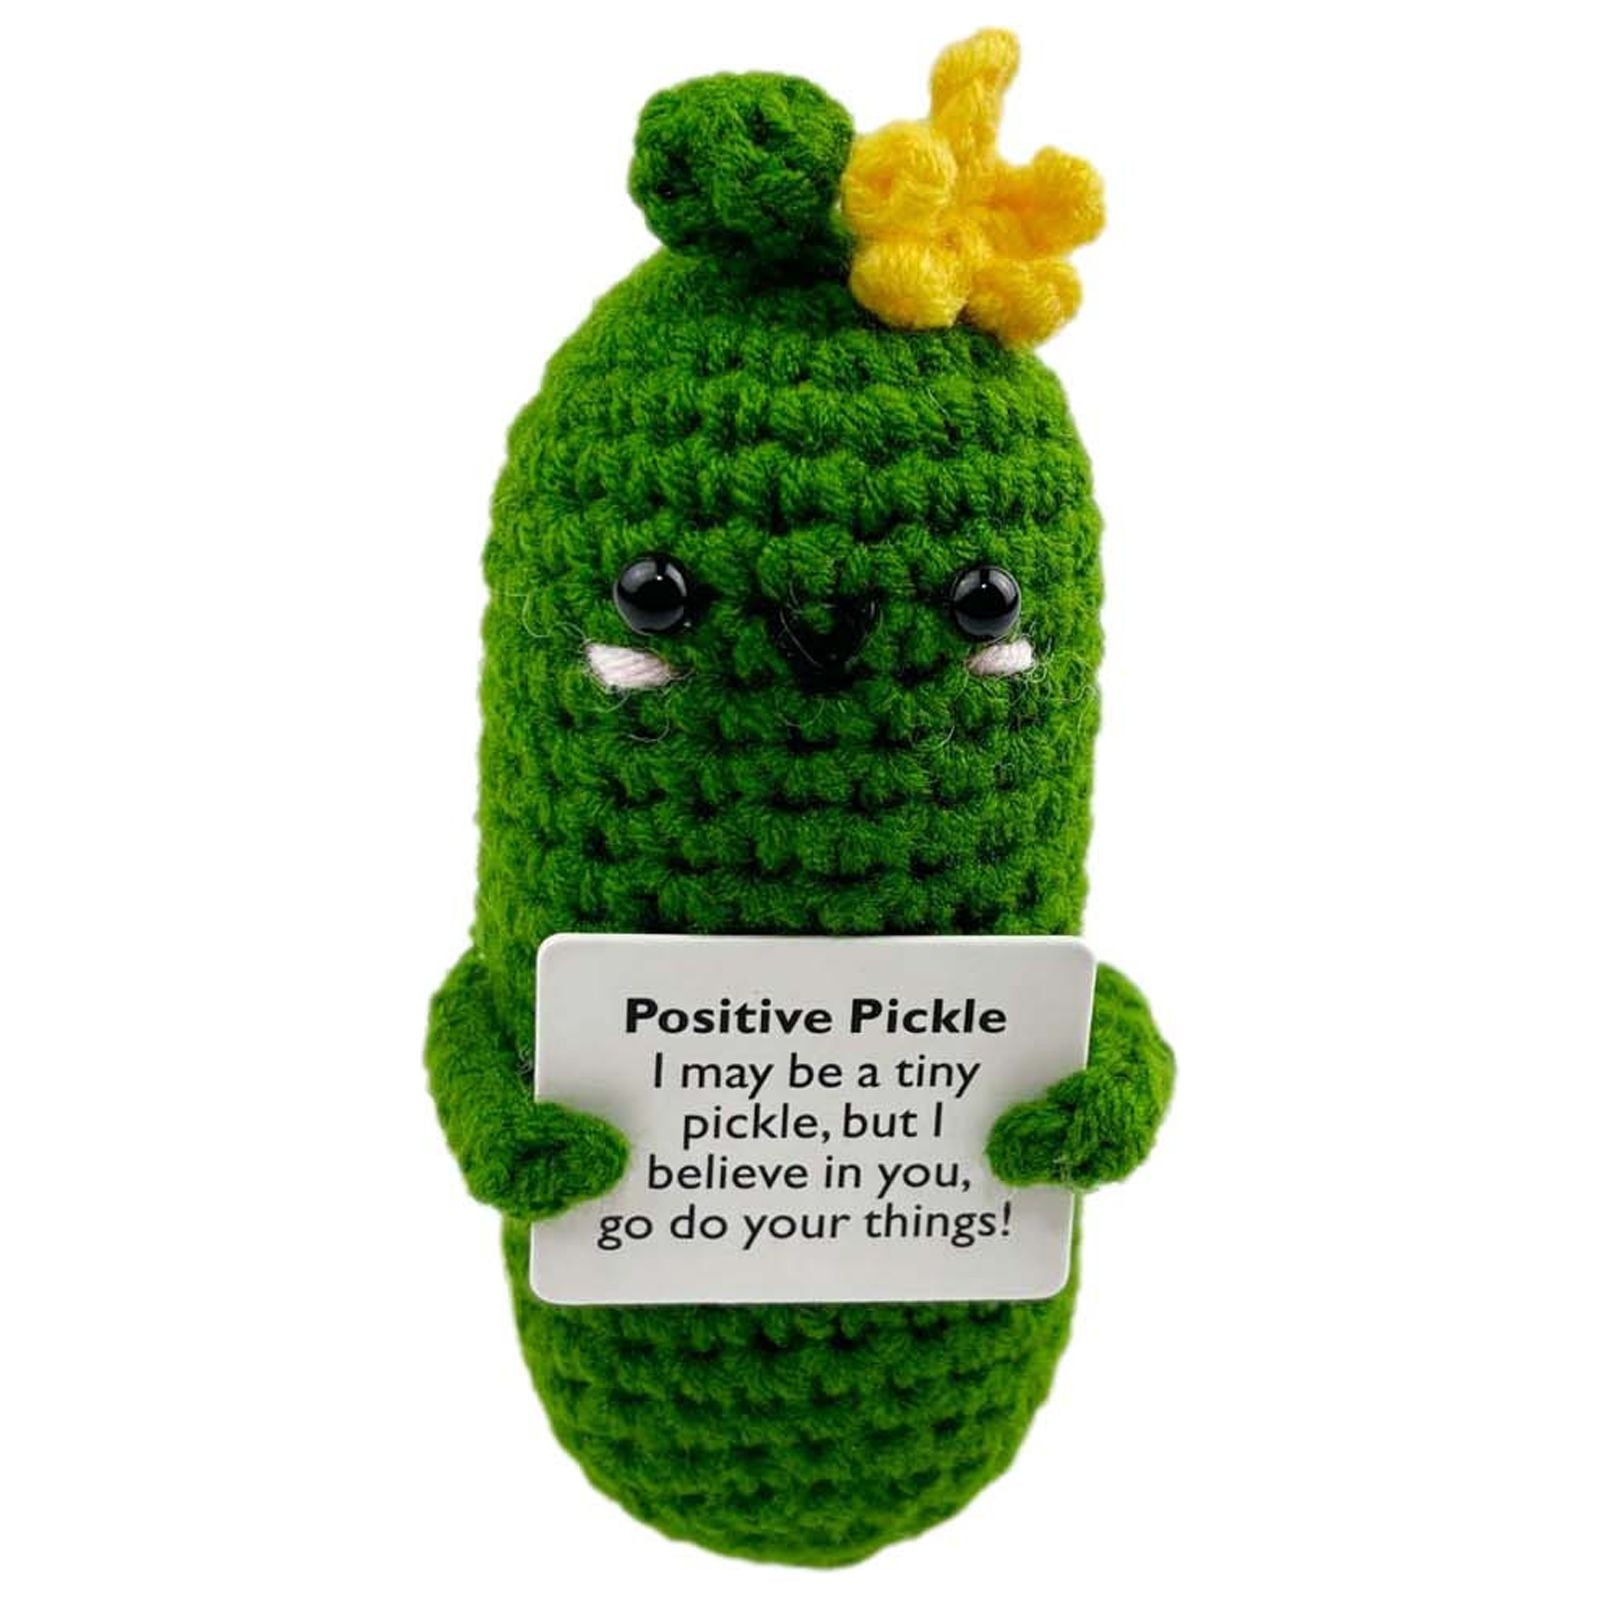  Coxolx Emotional Support Pickle, Positive Pickle Plush